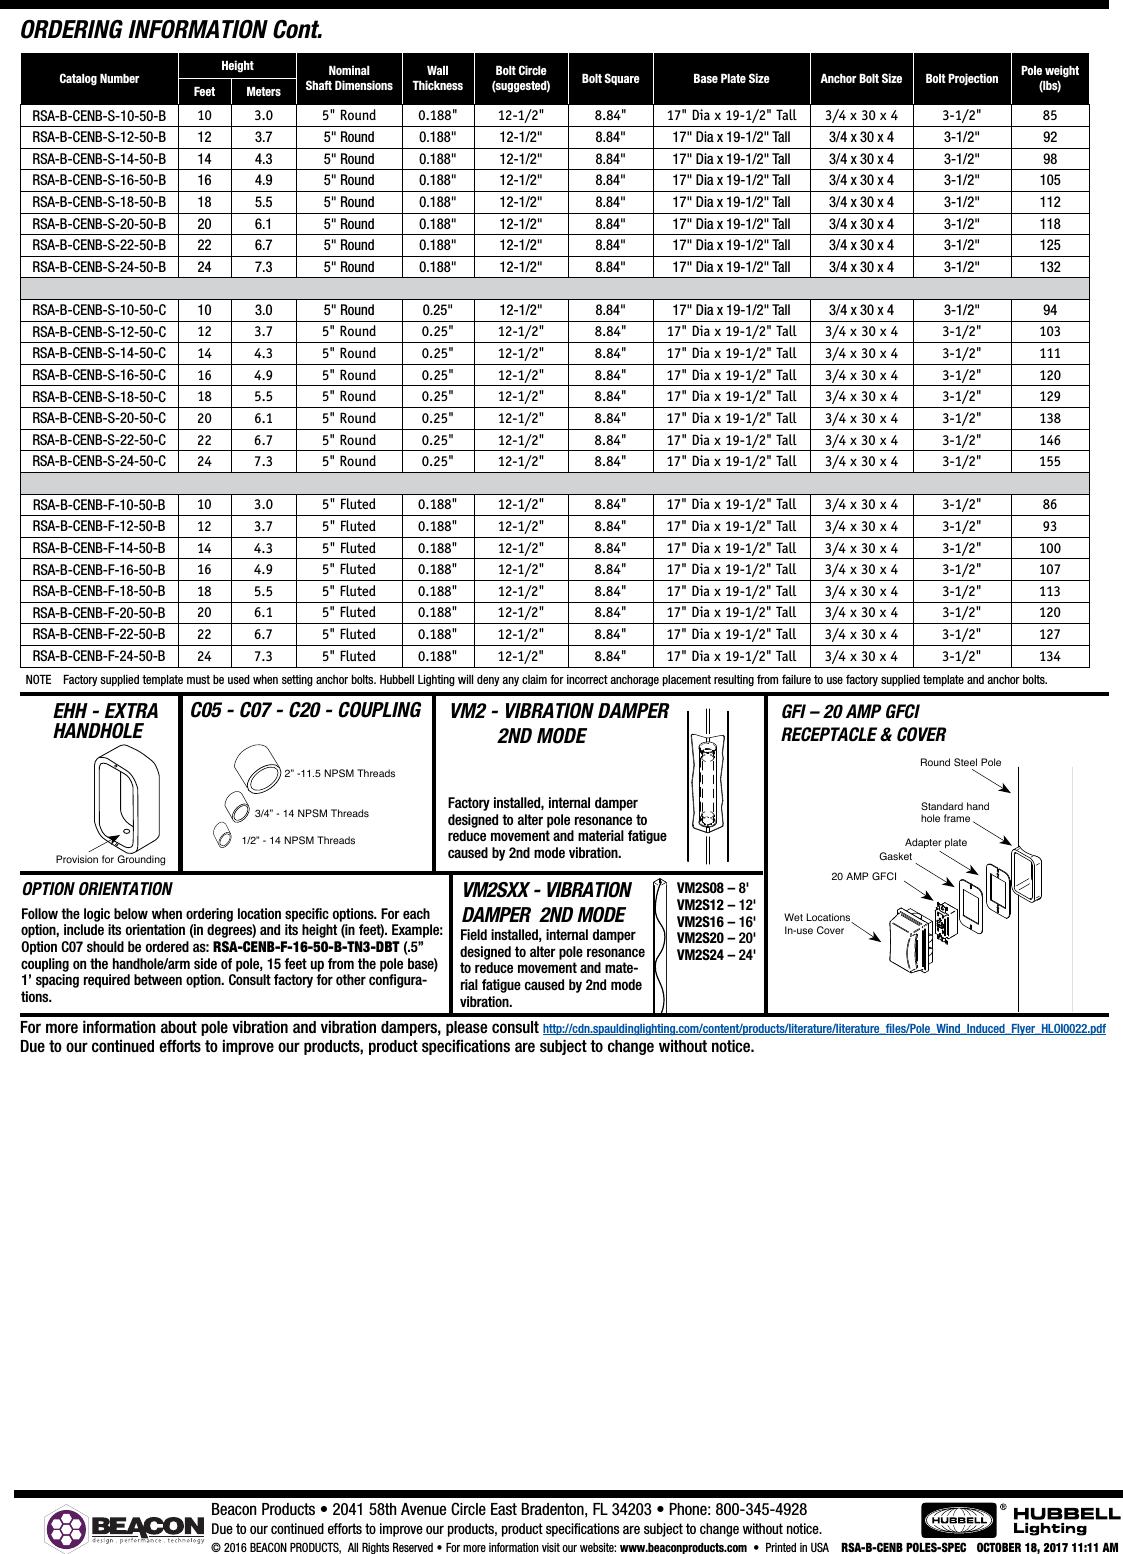 Page 2 of 4 - RSA B CENB Spec Sheet